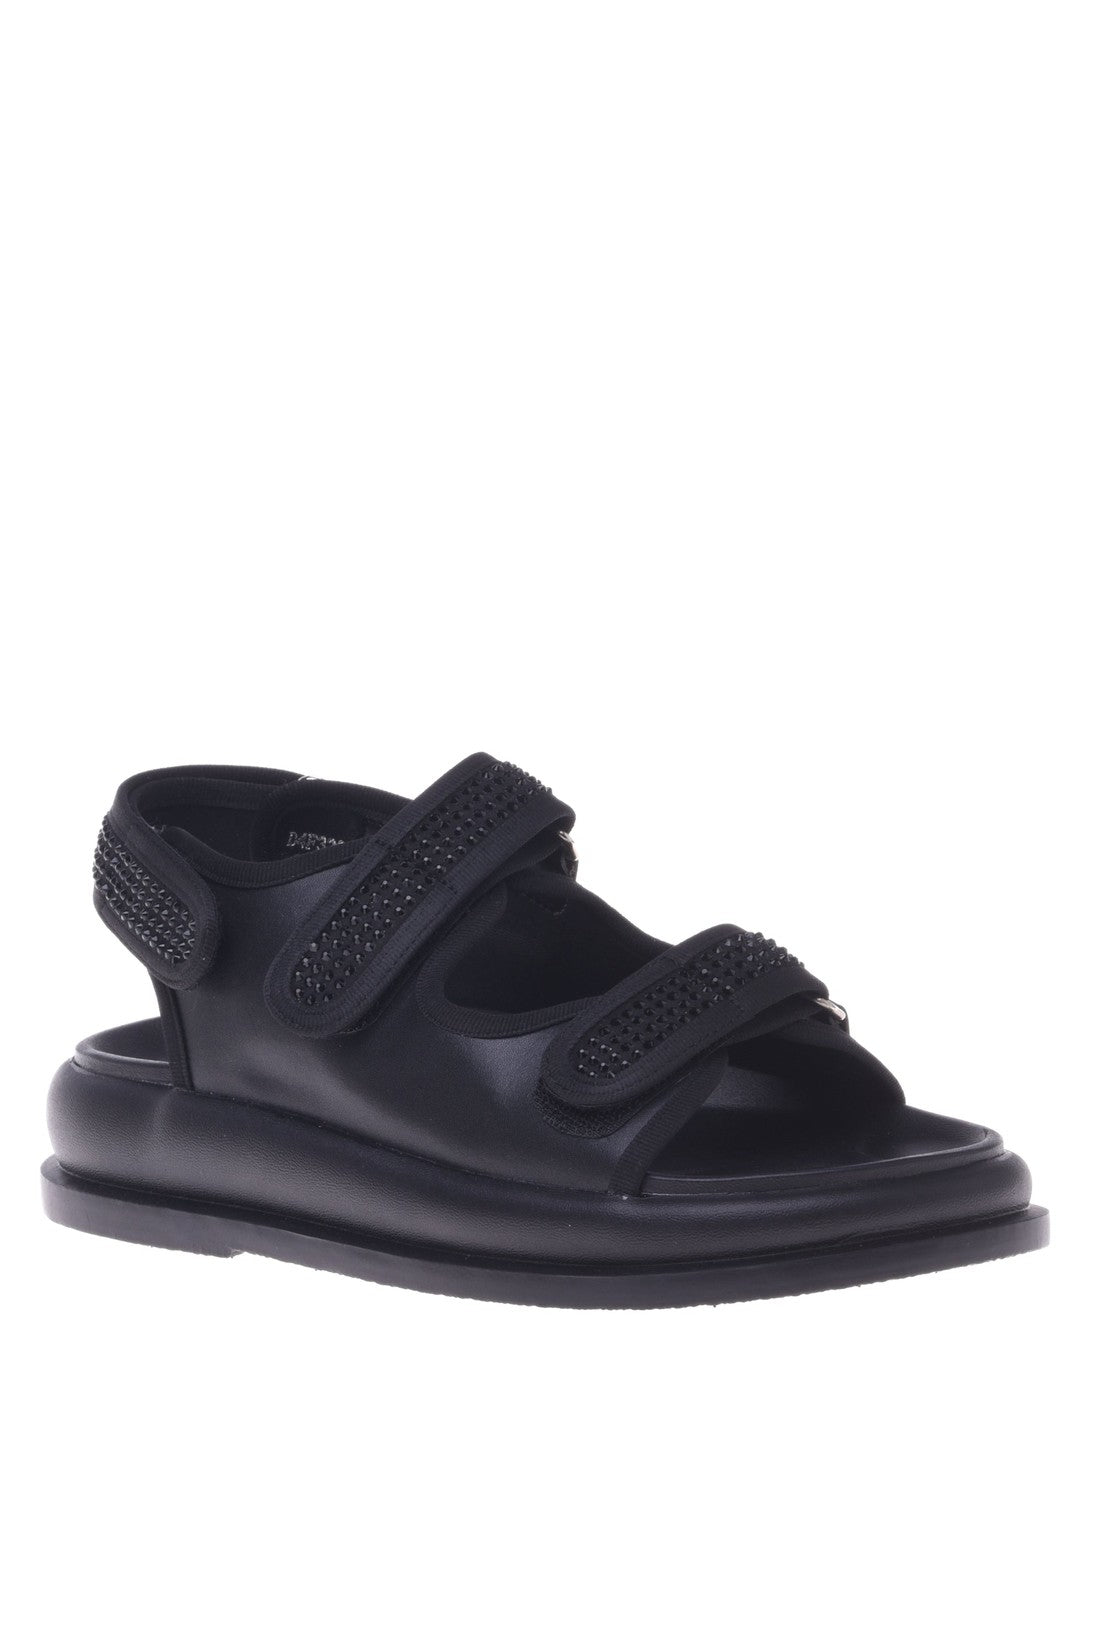 BALDININI-OUTLET-SALE-Sandal-in-black-calfskin-with-rhinestones-Sandalen-35-ARCHIVE-COLLECTION.jpg